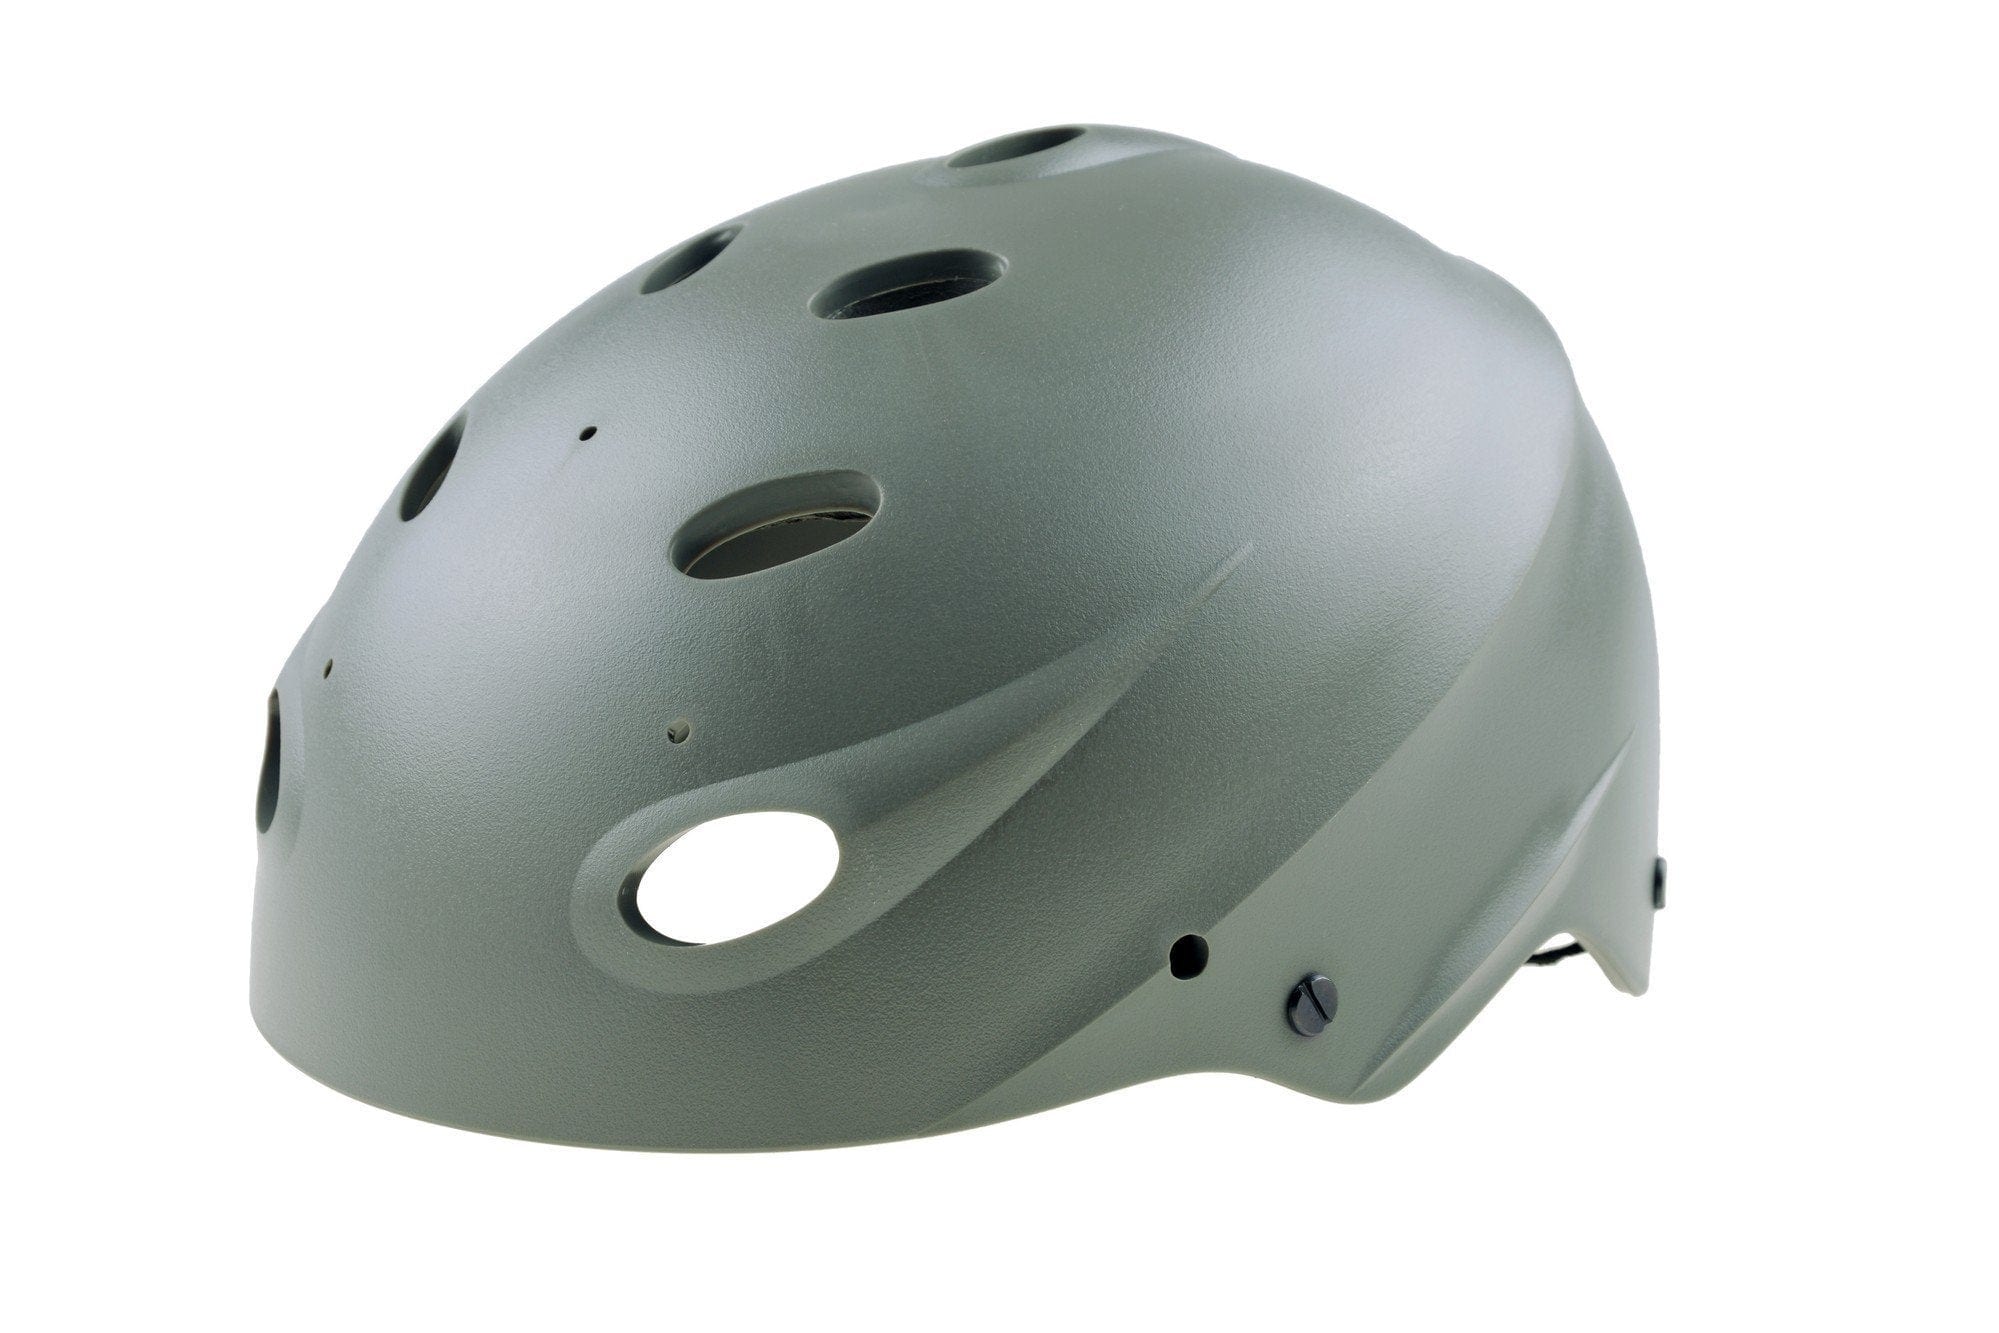 SFR ECO helmet replica - Foliage Green by FMA on Airsoft Mania Europe